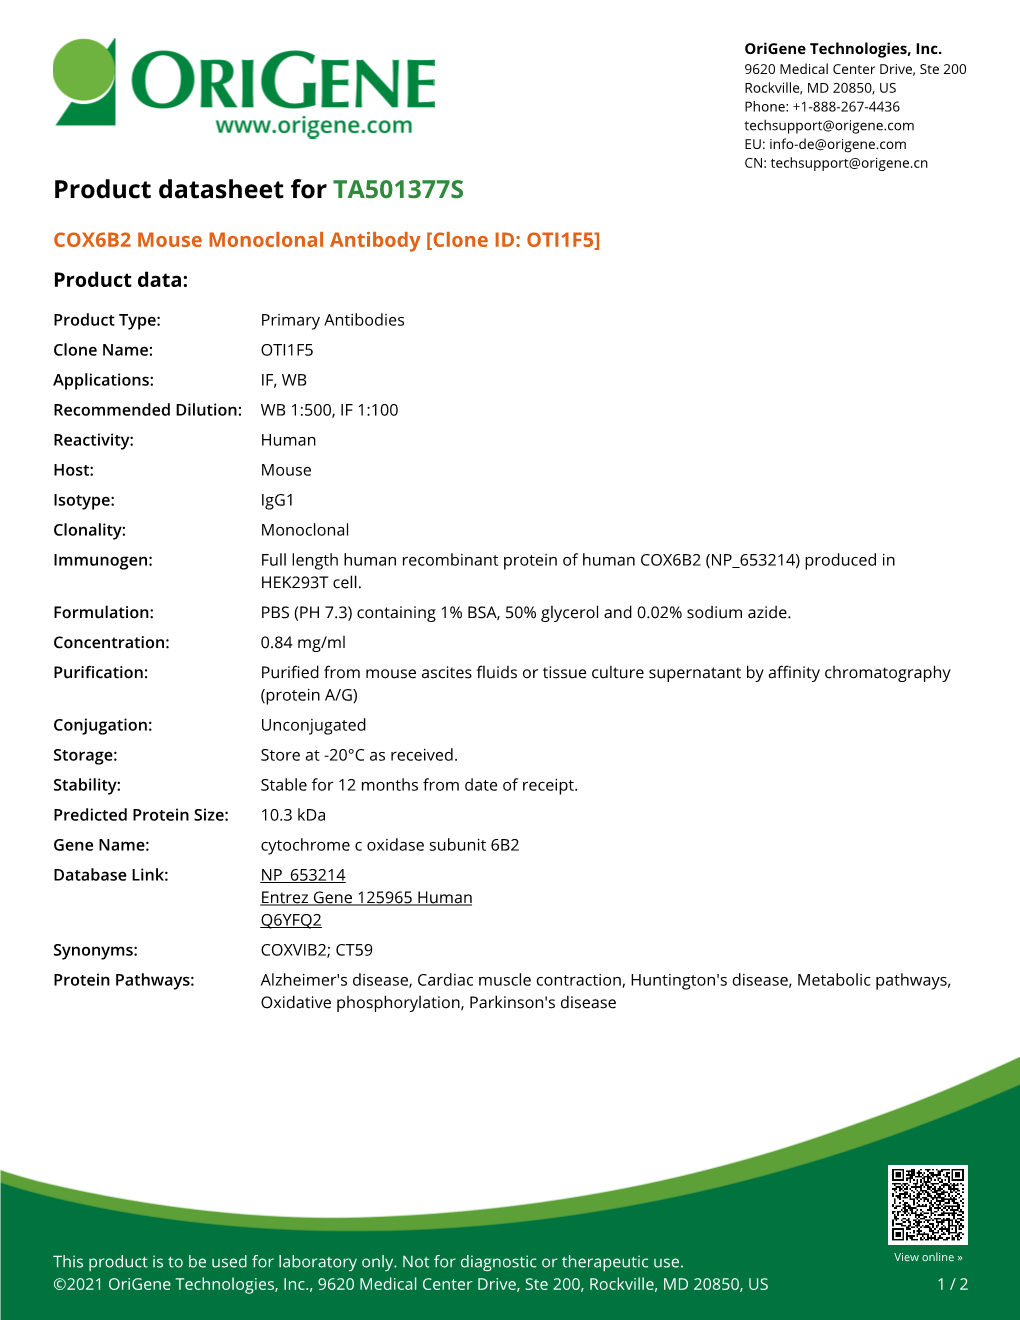 COX6B2 Mouse Monoclonal Antibody [Clone ID: OTI1F5] Product Data